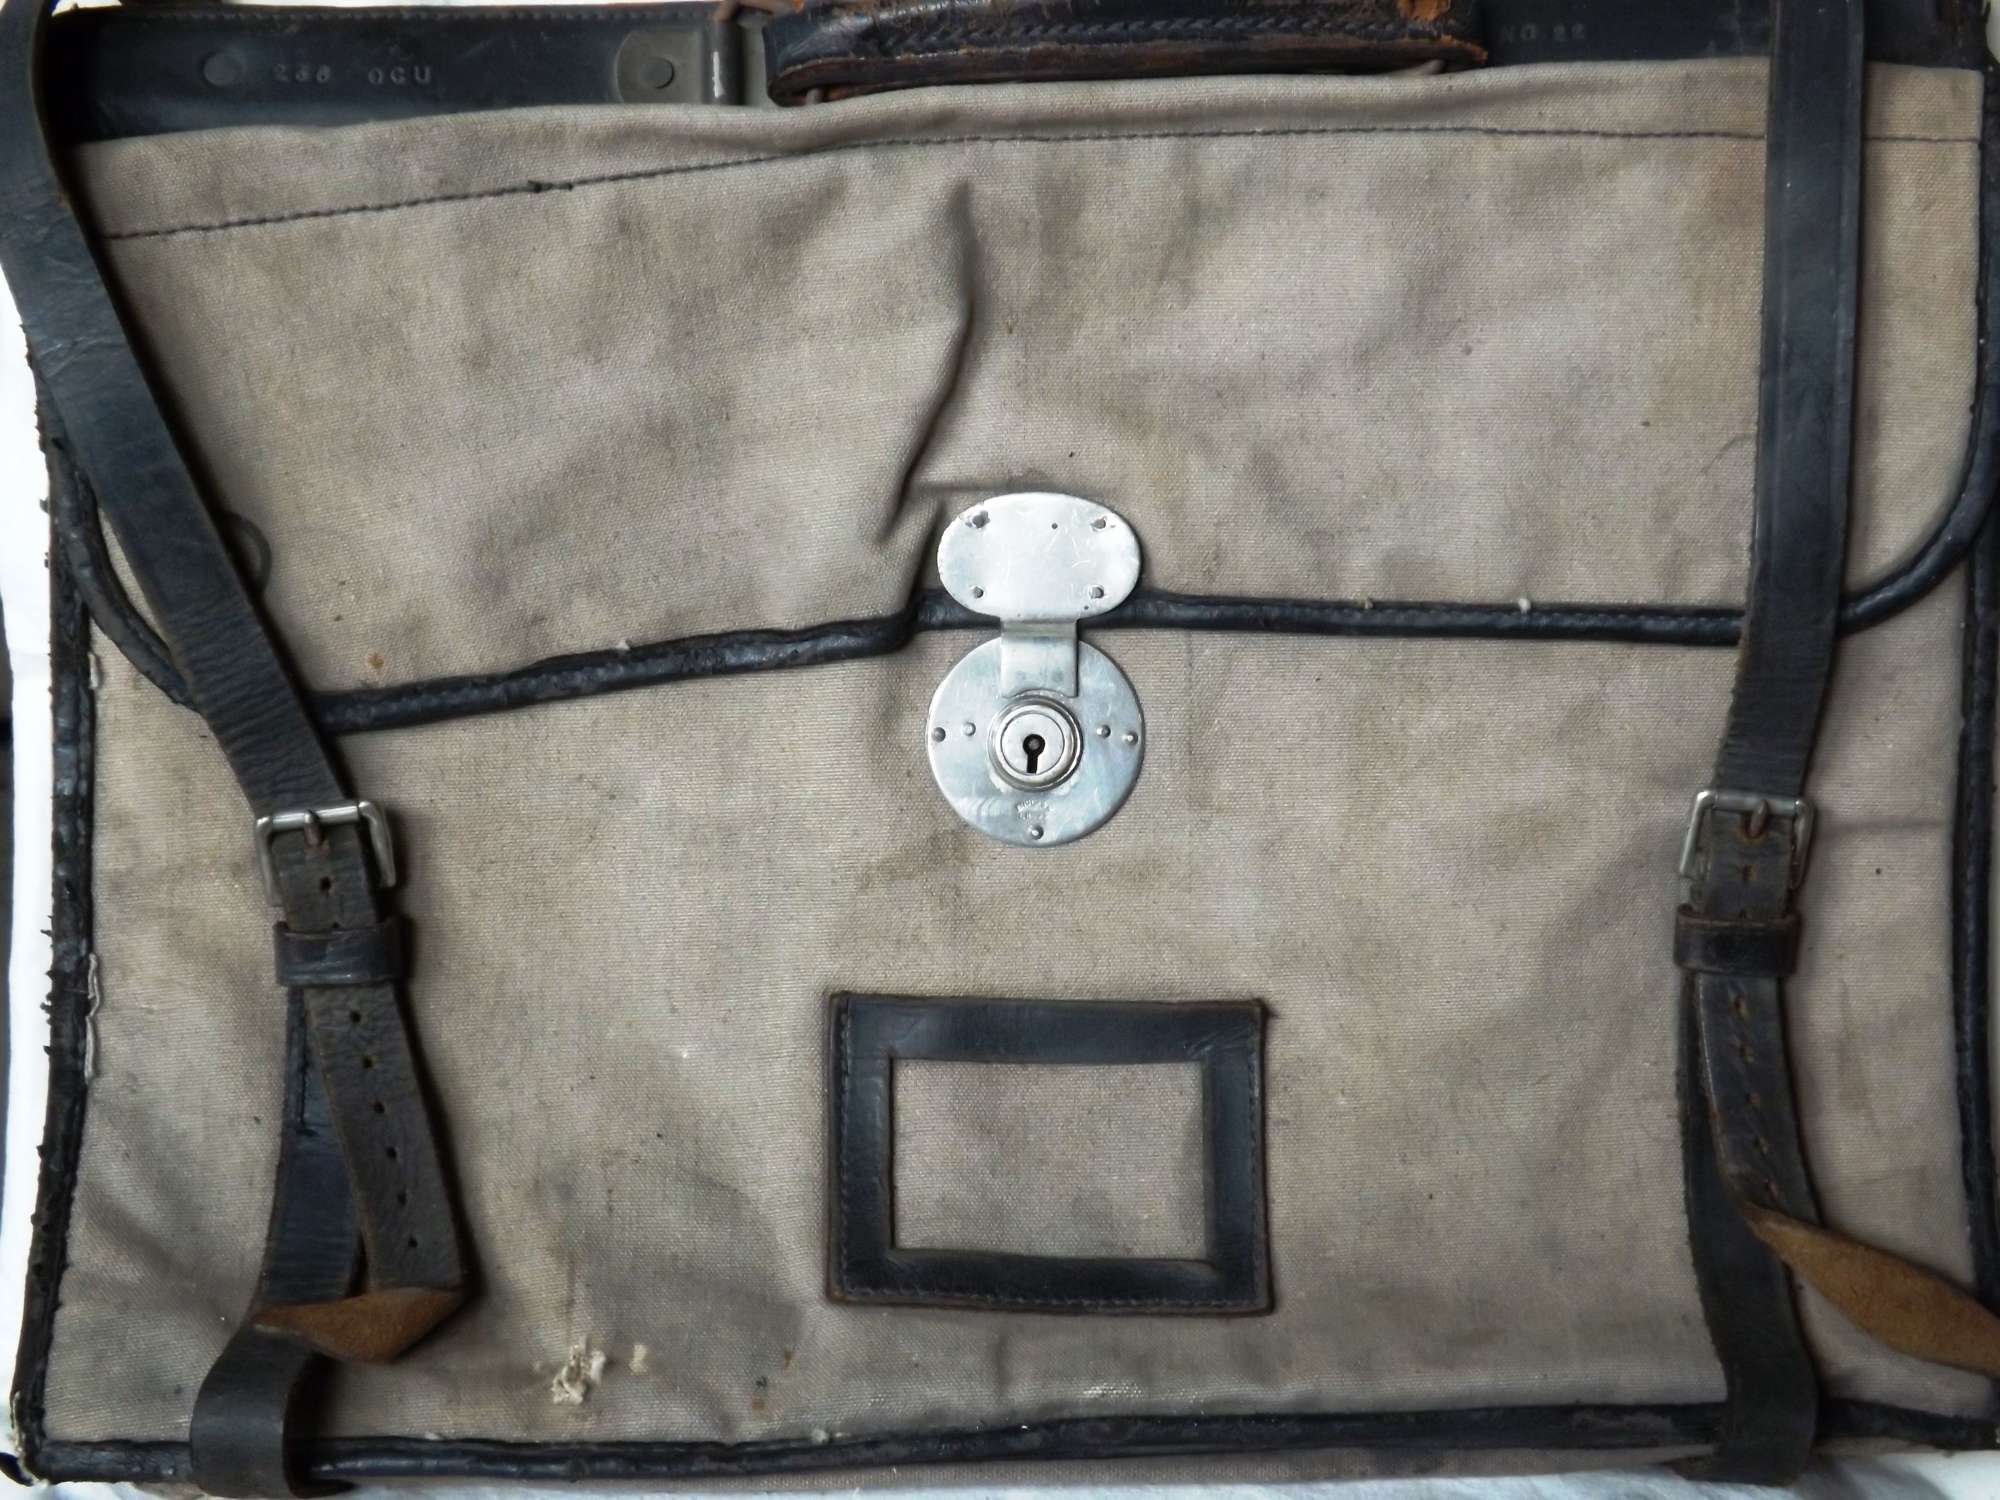 RAF Navigator's Bag with an unusual  history